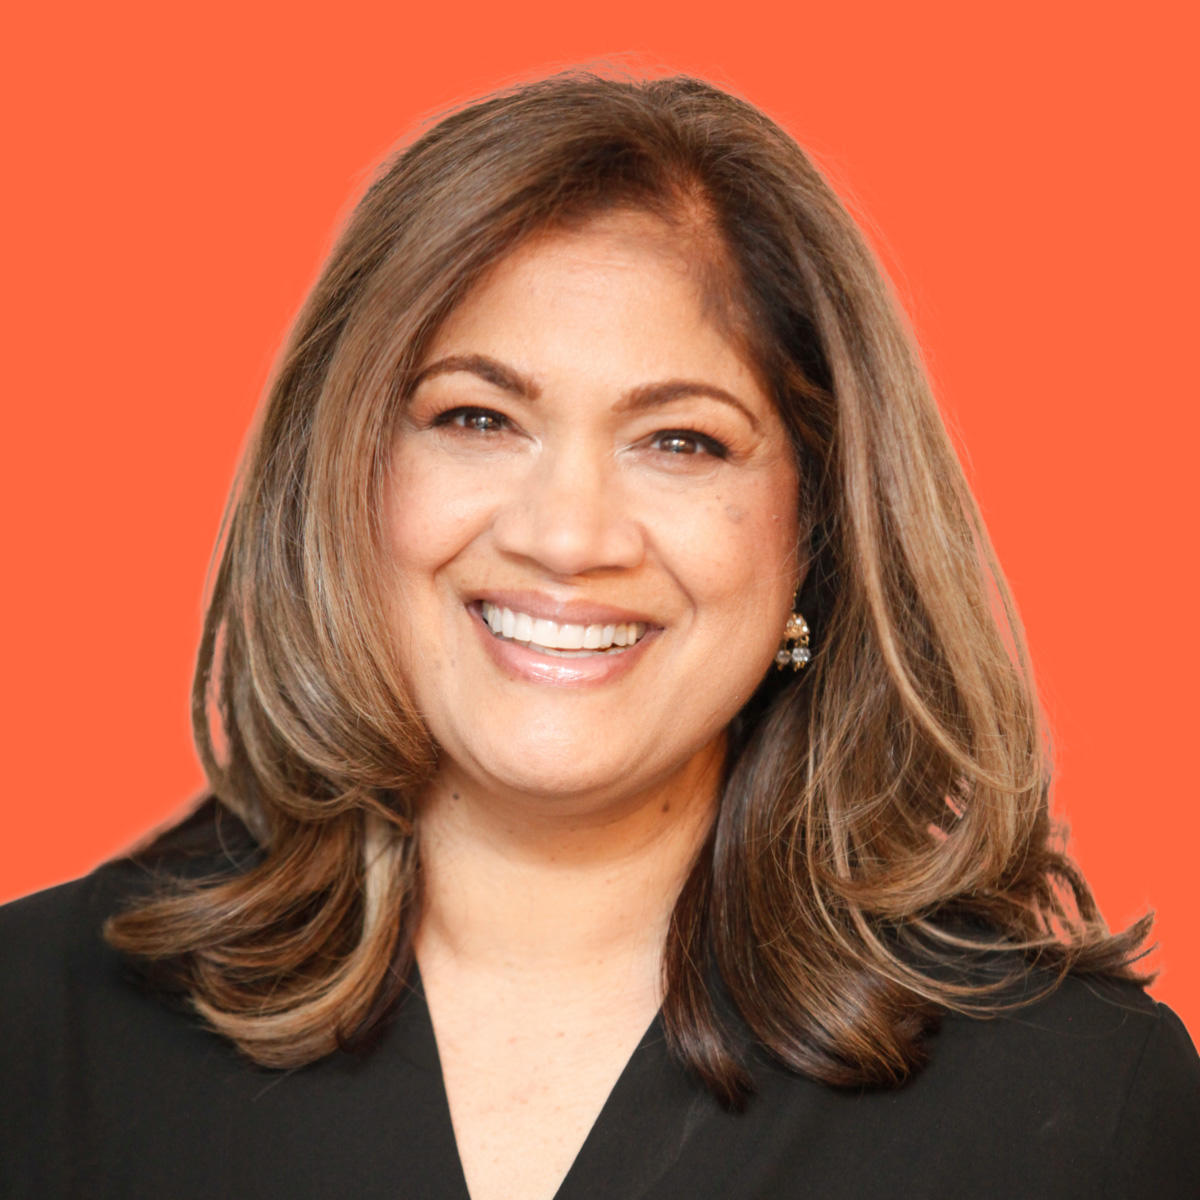 Portrait photo of Anita Valdez on an orange background.